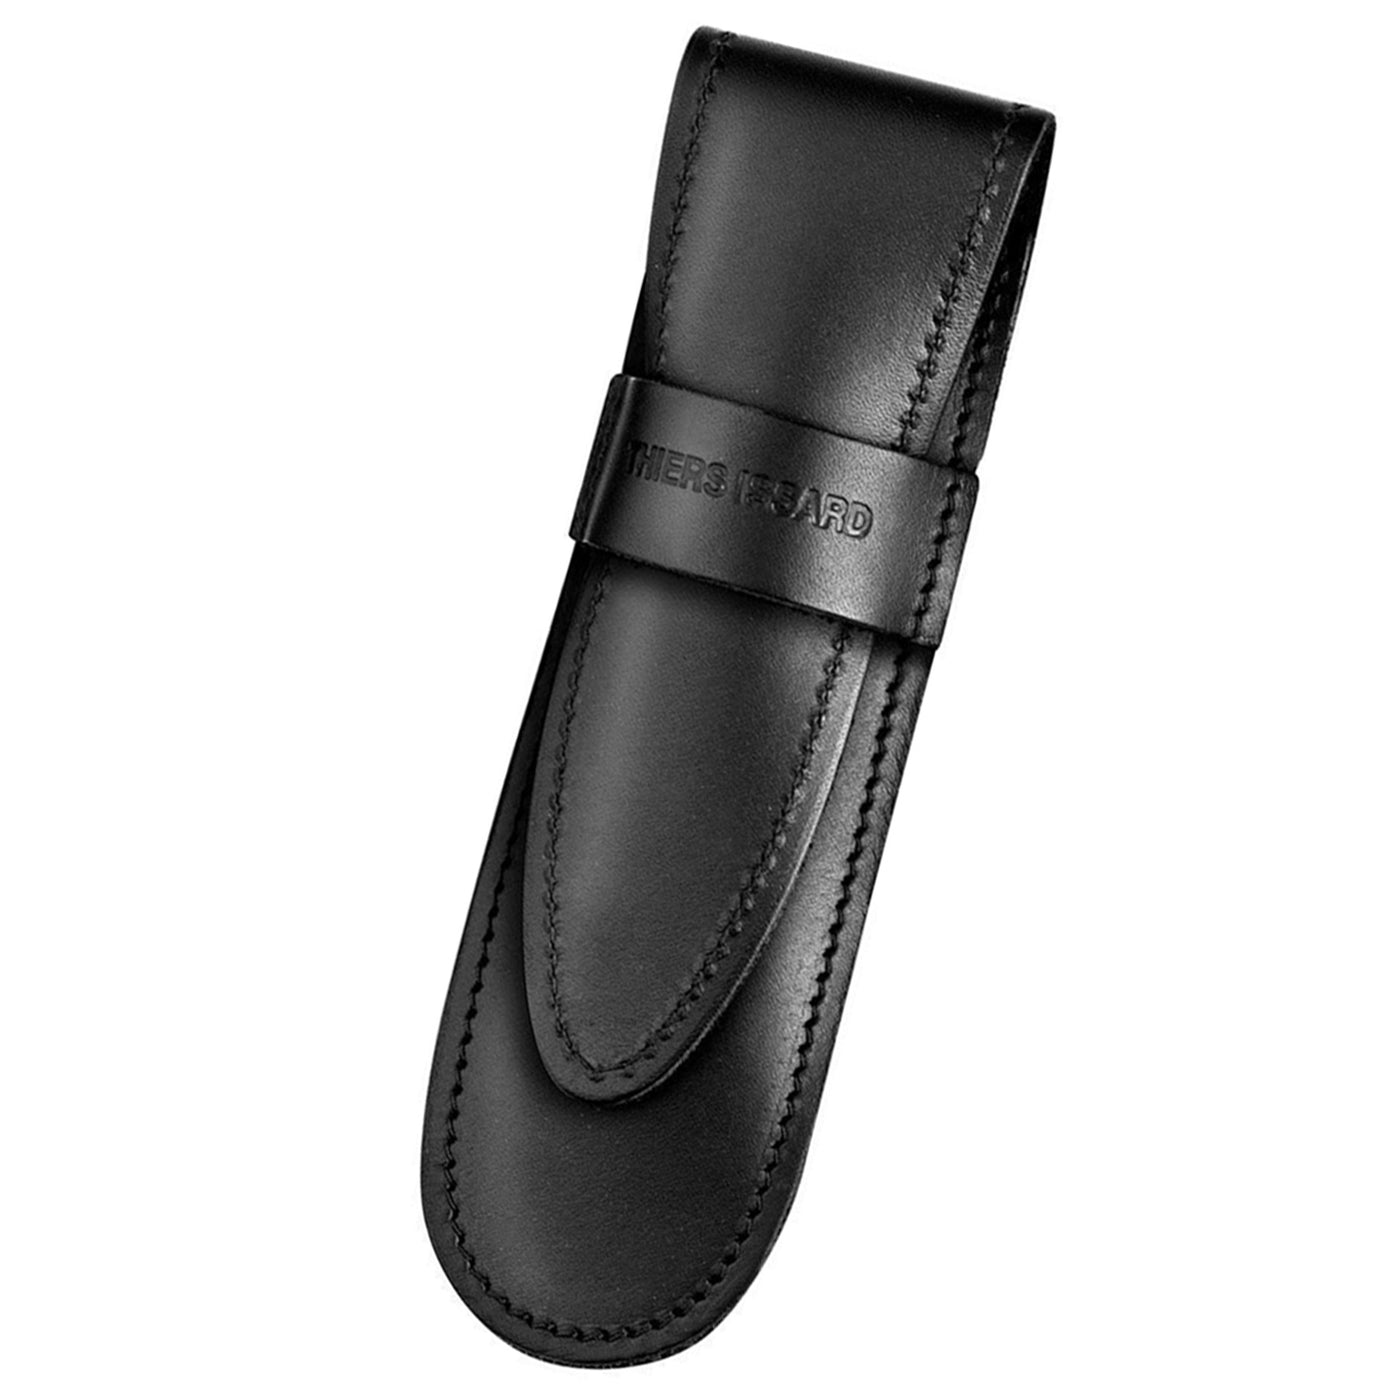 Thiers Issard Black Luxury Calf Leather Razor Wallet